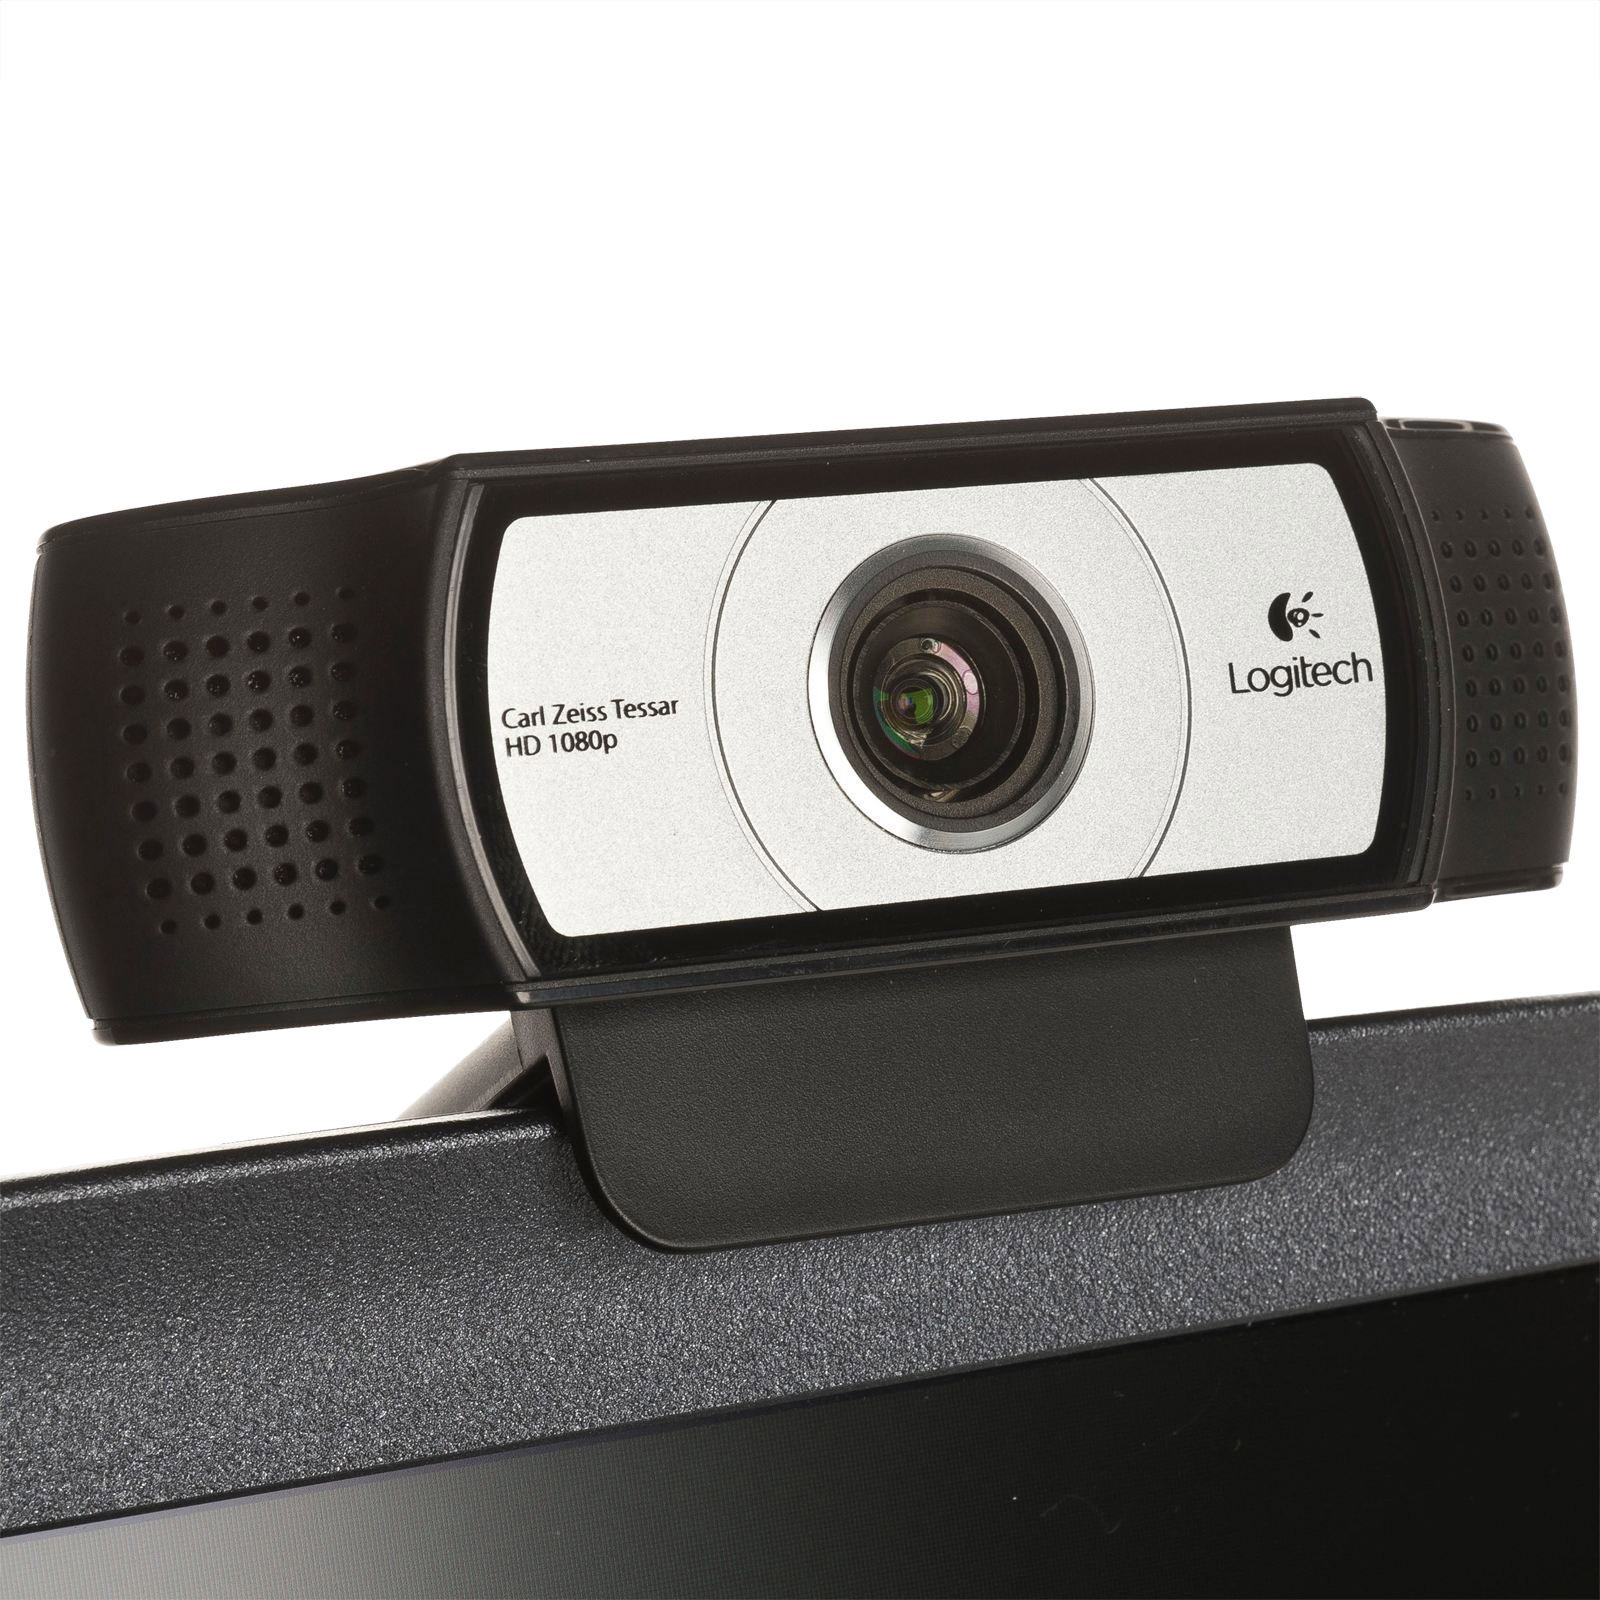 Купить веб камеру. Webcam Logitech c930. Веб-камера Logitech webcam c930e. Логитек 930 веб камера. Веб-камера Logitech Carl Zeiss Tessar HD 1080p.